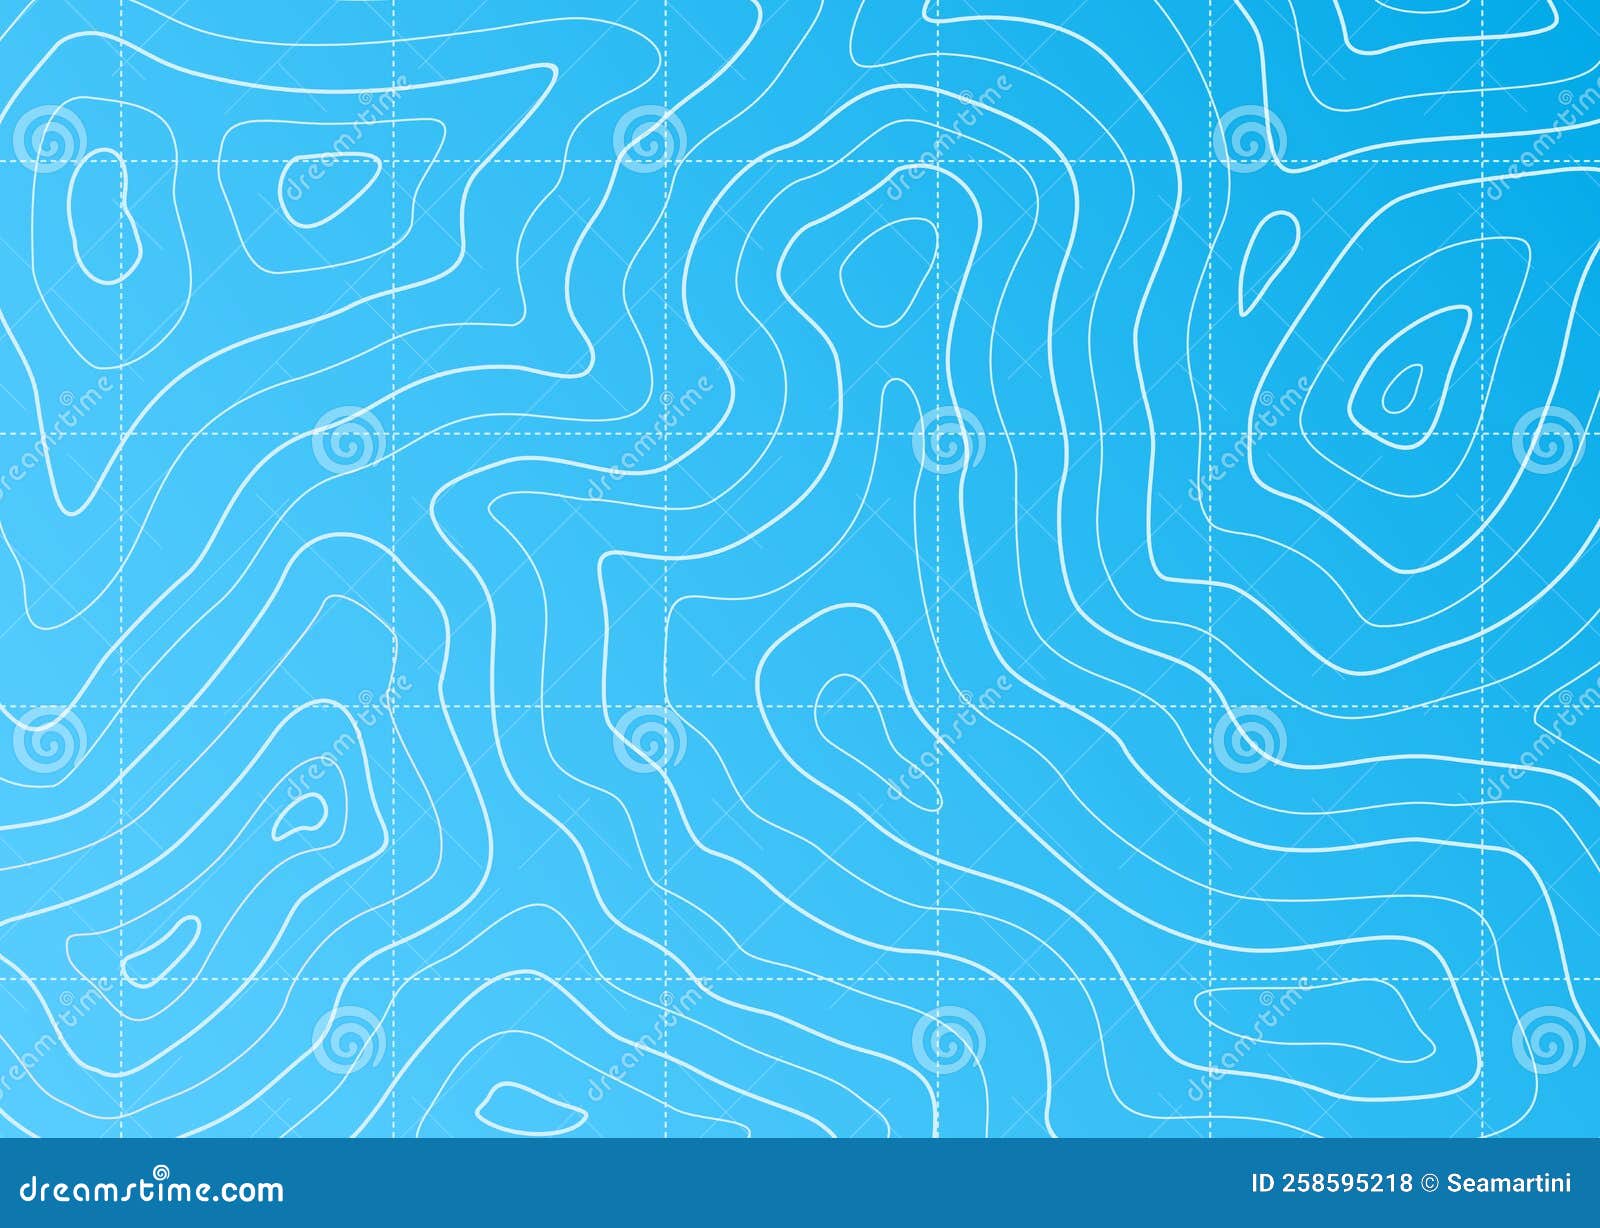 Line Contour Ocean or Sea Topographic Map Stock Illustration ...